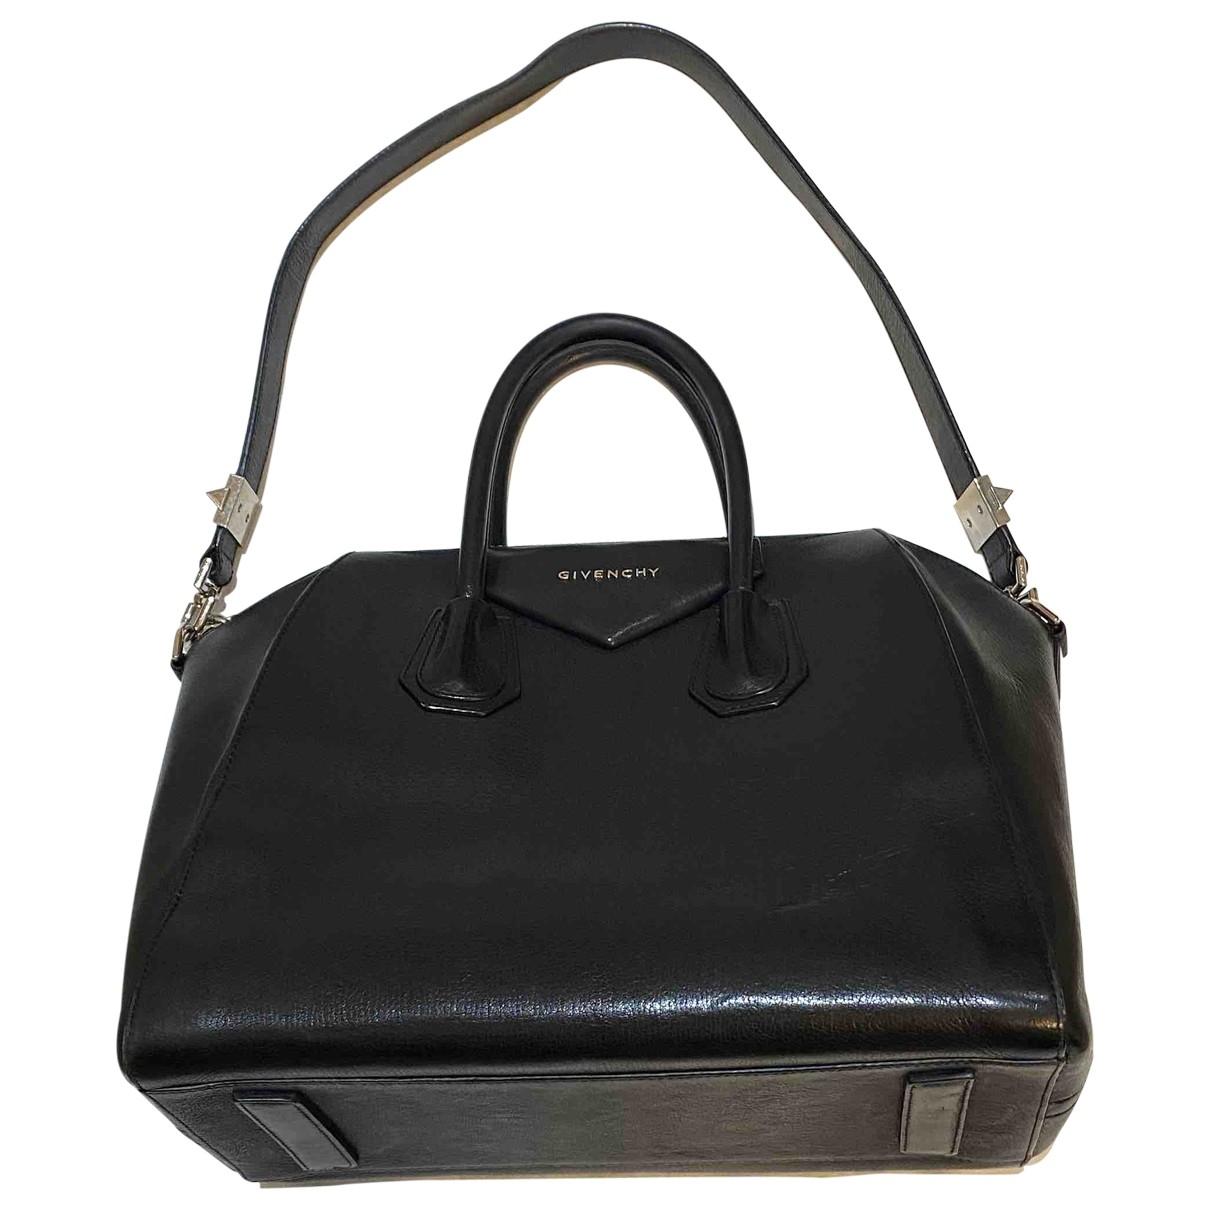 Givenchy Antigona Leather Handbag in Black - Lyst